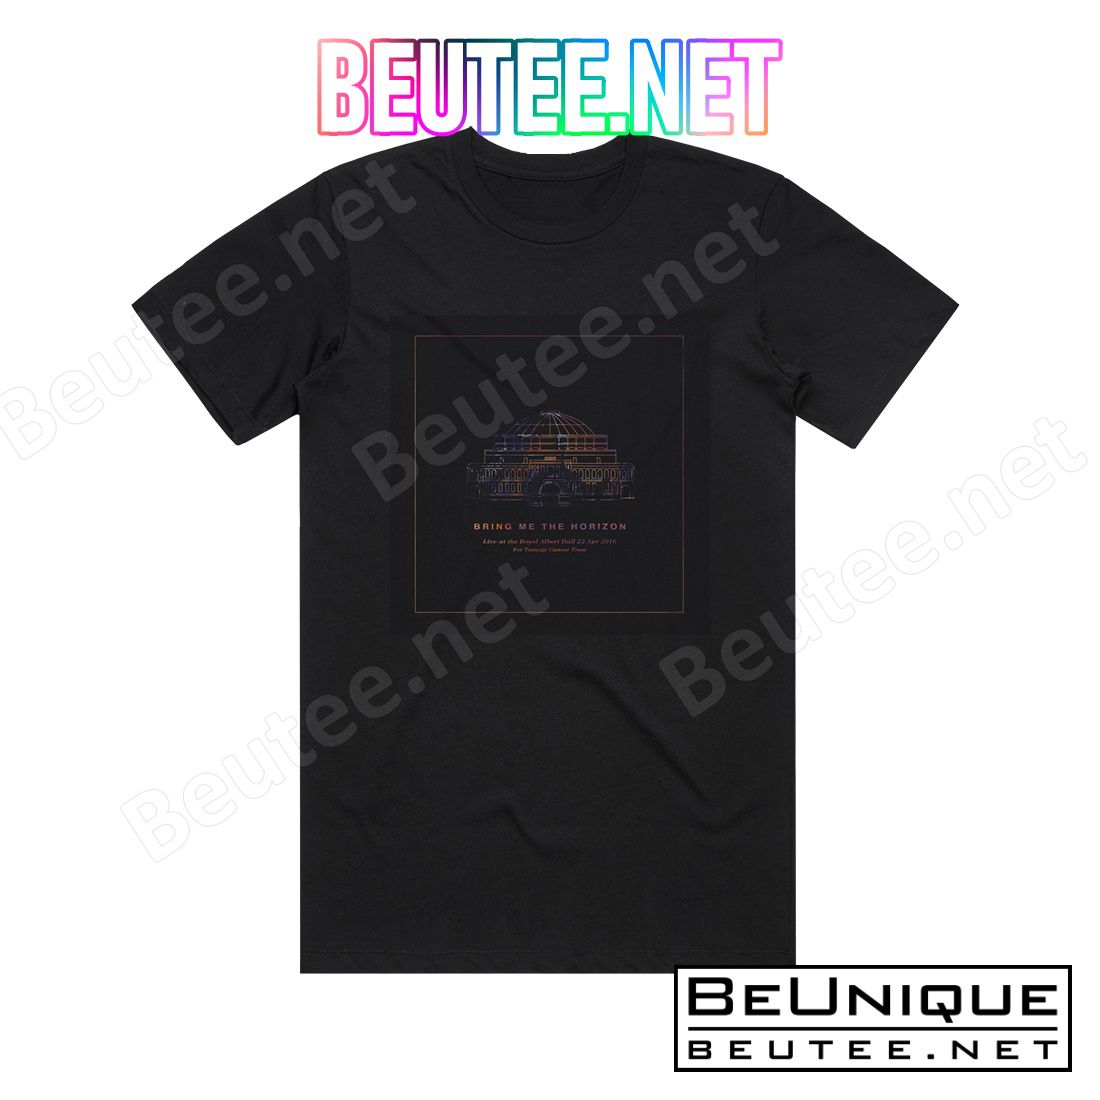 Bring Me the Horizon Live At The Royal Albert Hall Album Cover T-Shirt